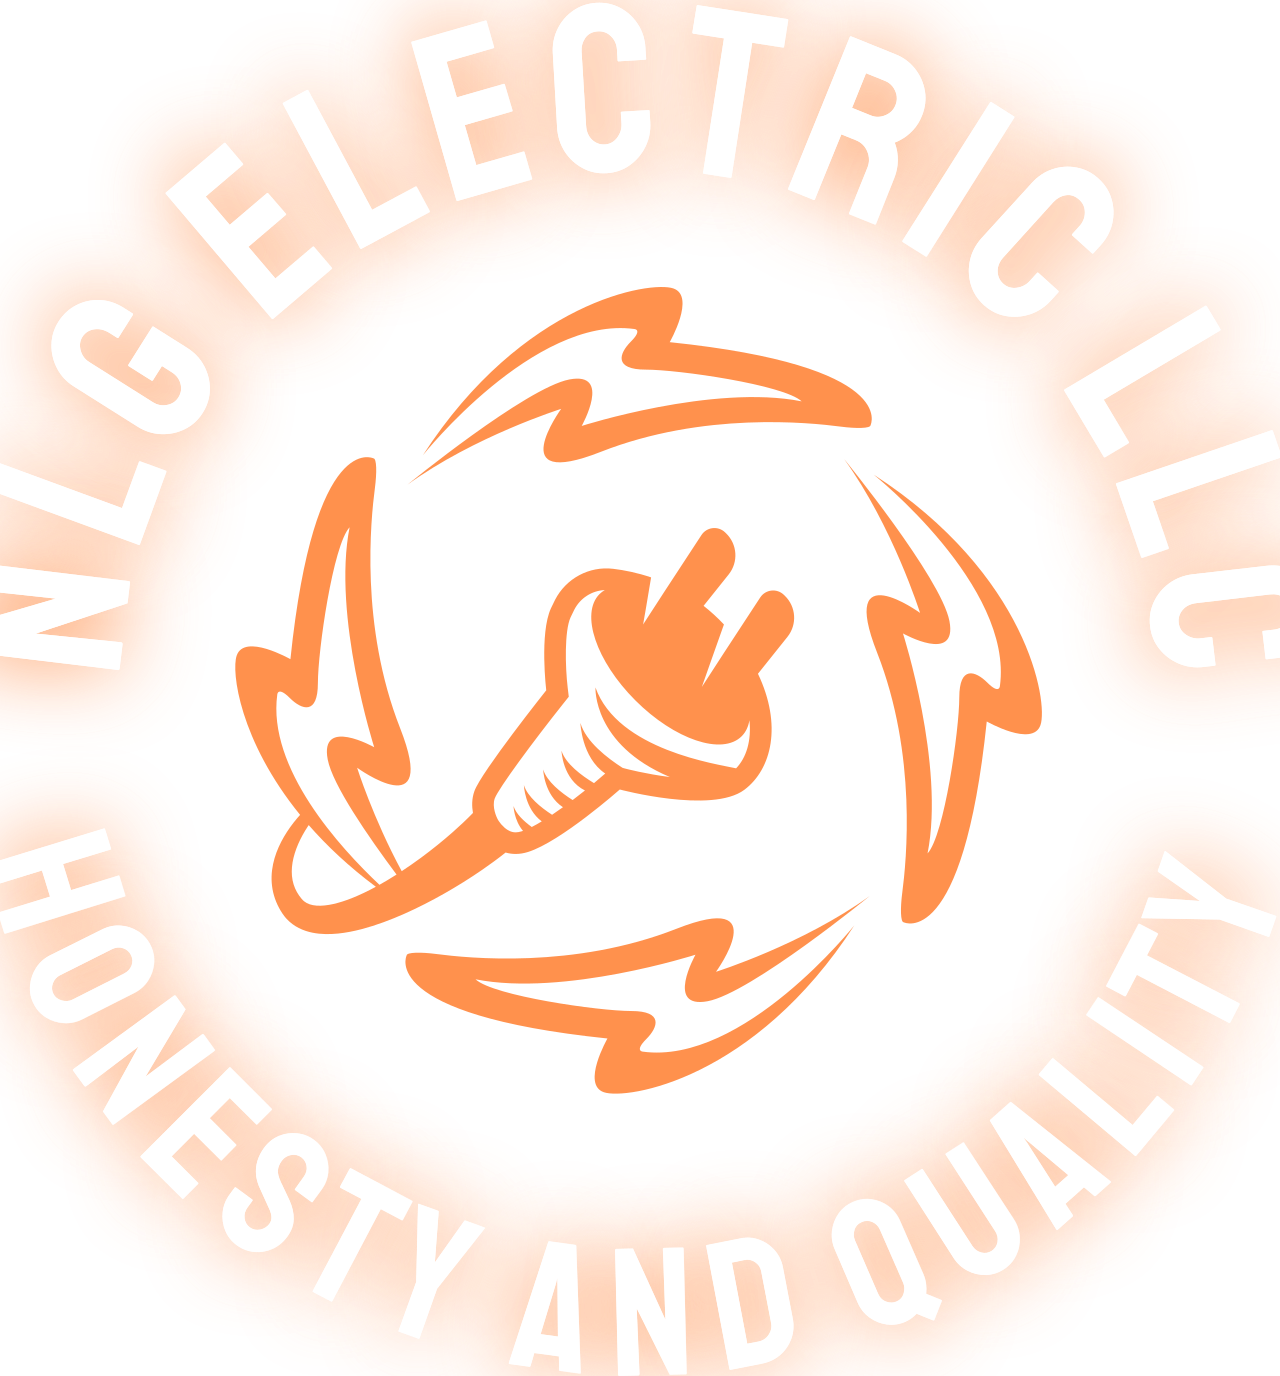 NLG ELECTRIC LLC's logo